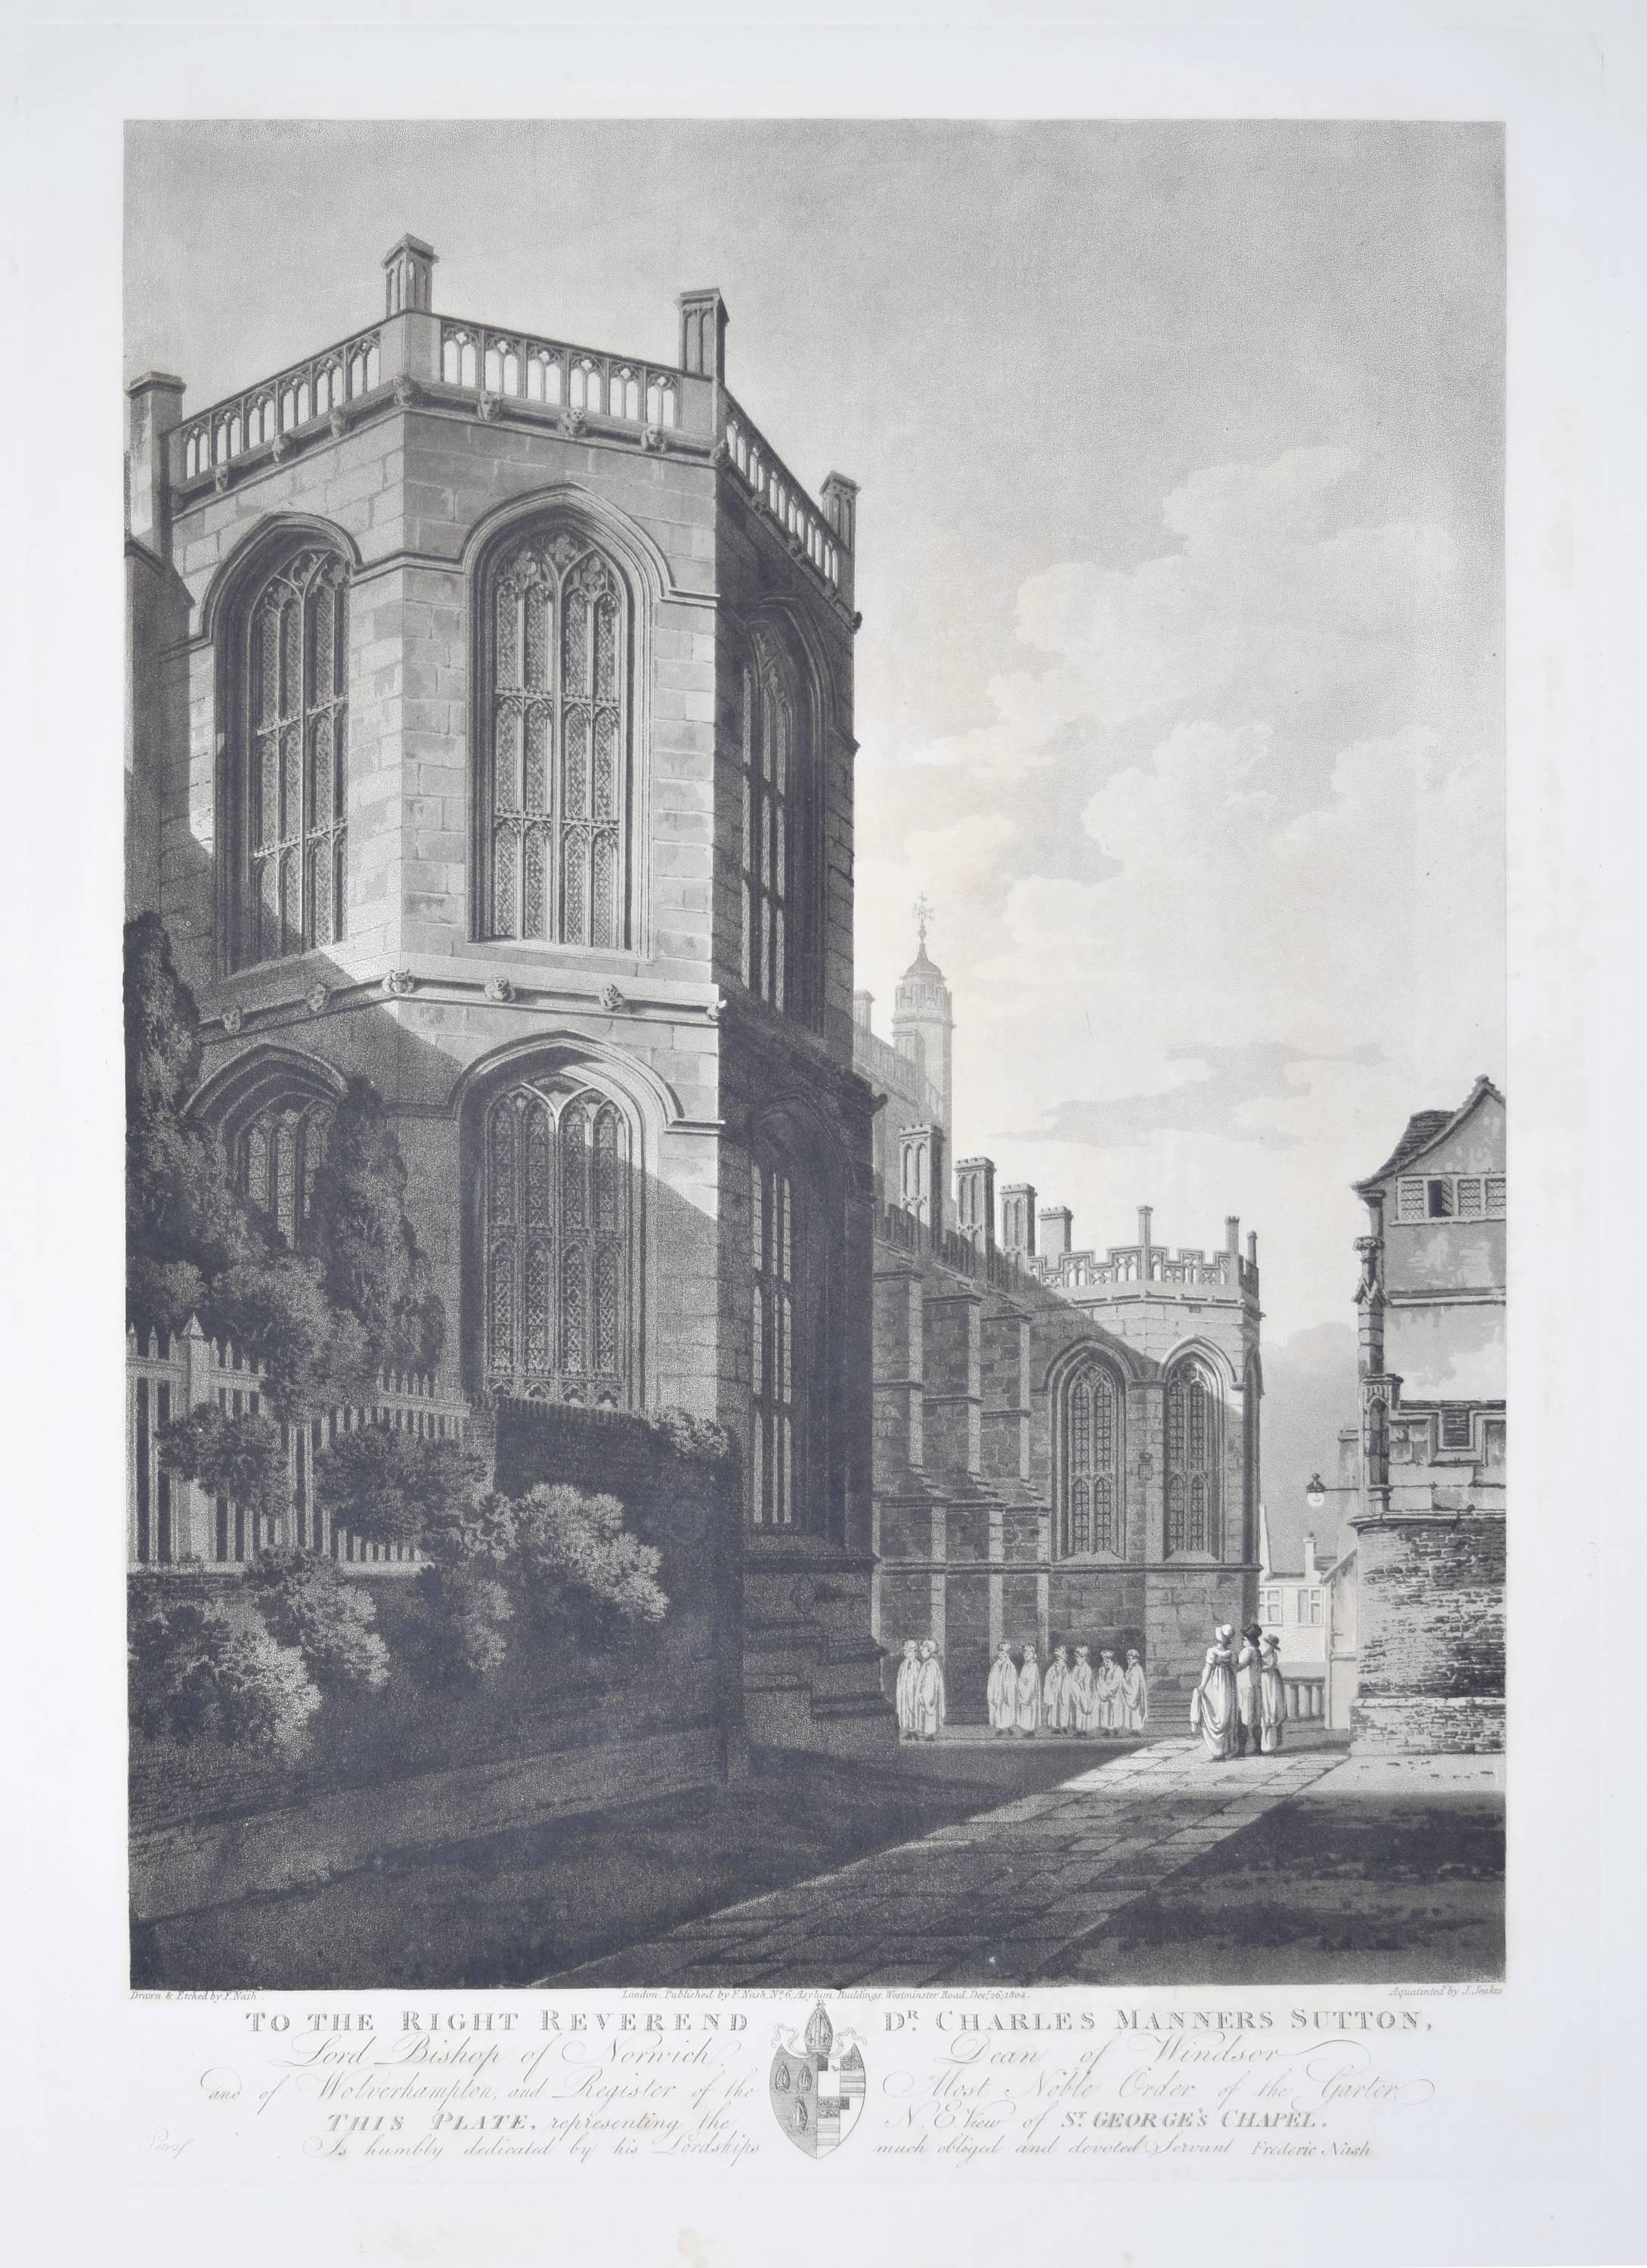 1804  St George's Chapel Windsor Castle Prince Harry Meghan Markle Royal Wedding